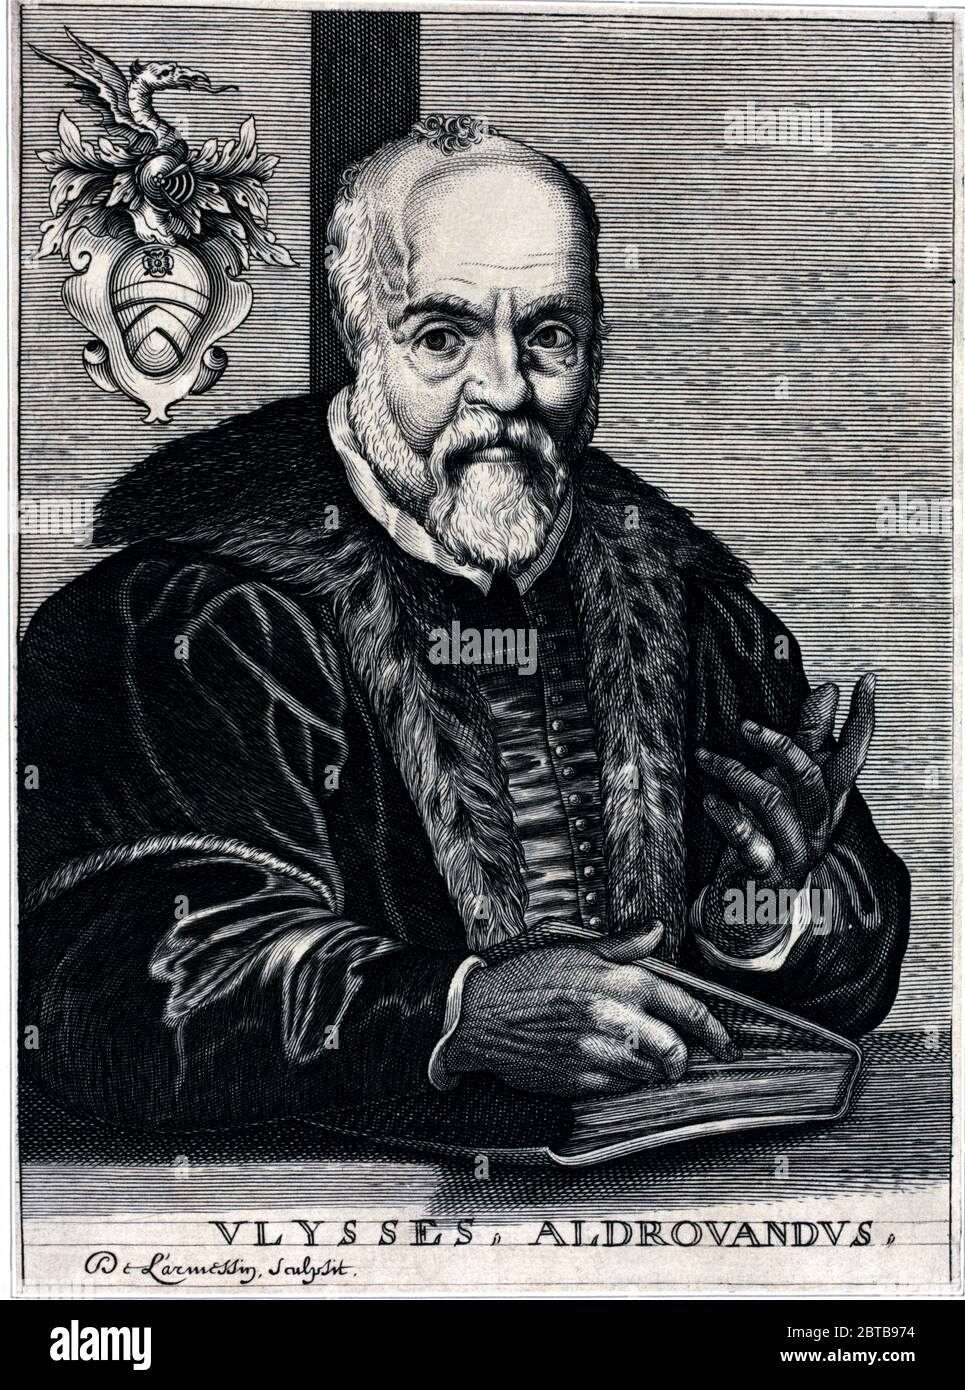 1590 c, ITALY : The italian naturalist , enthomologist ,  biologist , botanist ULISSE ALDROVANDI ( 1522 - 1605 ) aka Ulysses Aldrovandus aka Aldovrandi . Portrait by engraver Nicolas de Larmessin ( 1632 - 1694 ) . - HISTORY - foto storica storiche - portrait - ritratto - NATURALISTA - NATURALIST - SCIENZA - SCIENCE - BIOLOGY - BIOLOGIA - ENTOMOLOGO - ENTOMOLOGIA - BOTANICO - BOTANICA - BOTANIC - illustration - illustrazione - incisione - engraving  - beard - barba - libro - book --- Archivio GBB Stock Photo